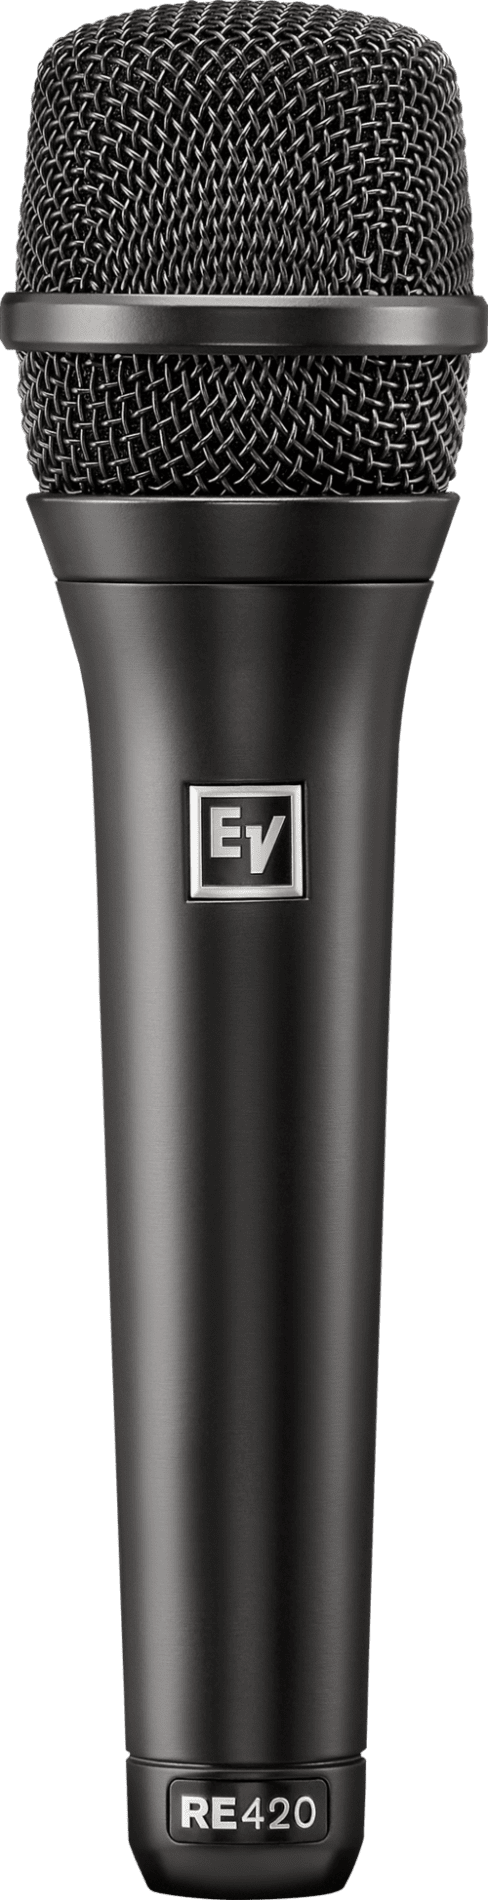 Electro-Voice EV RE420